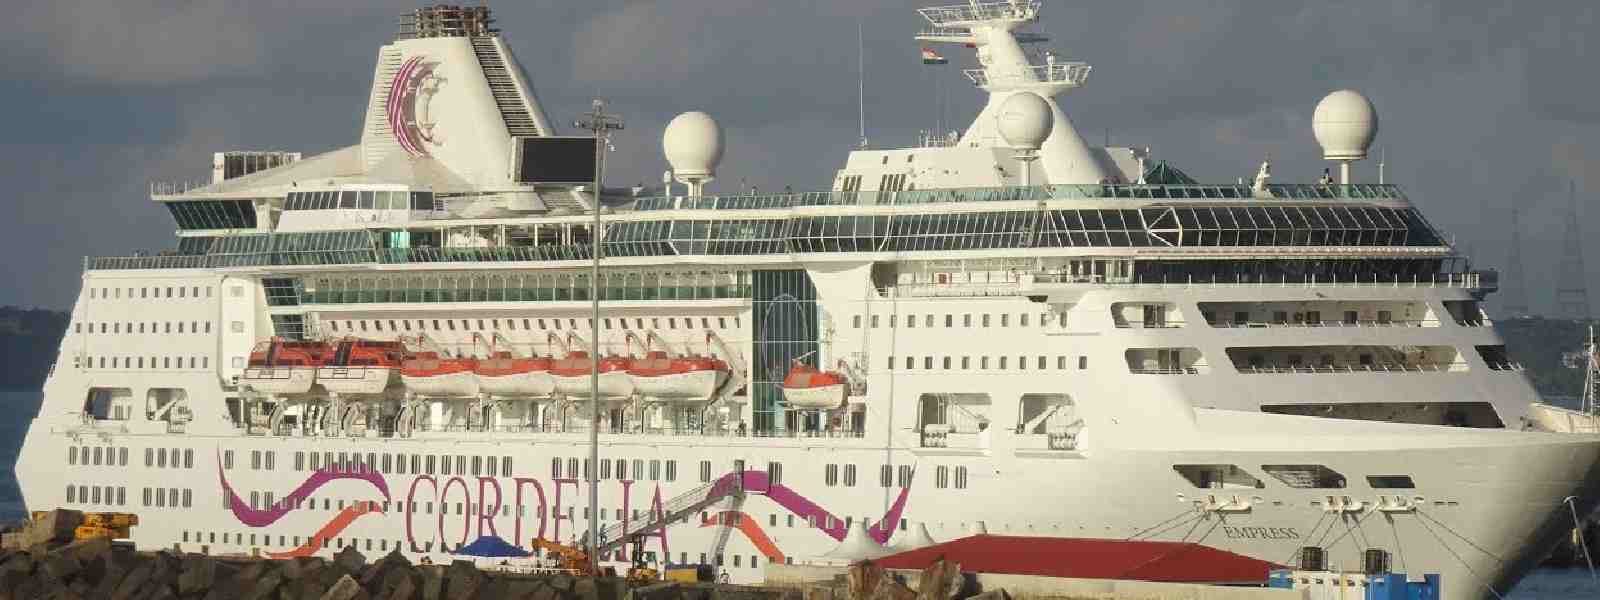 MV Empress on maiden voyage from Chennai to SL